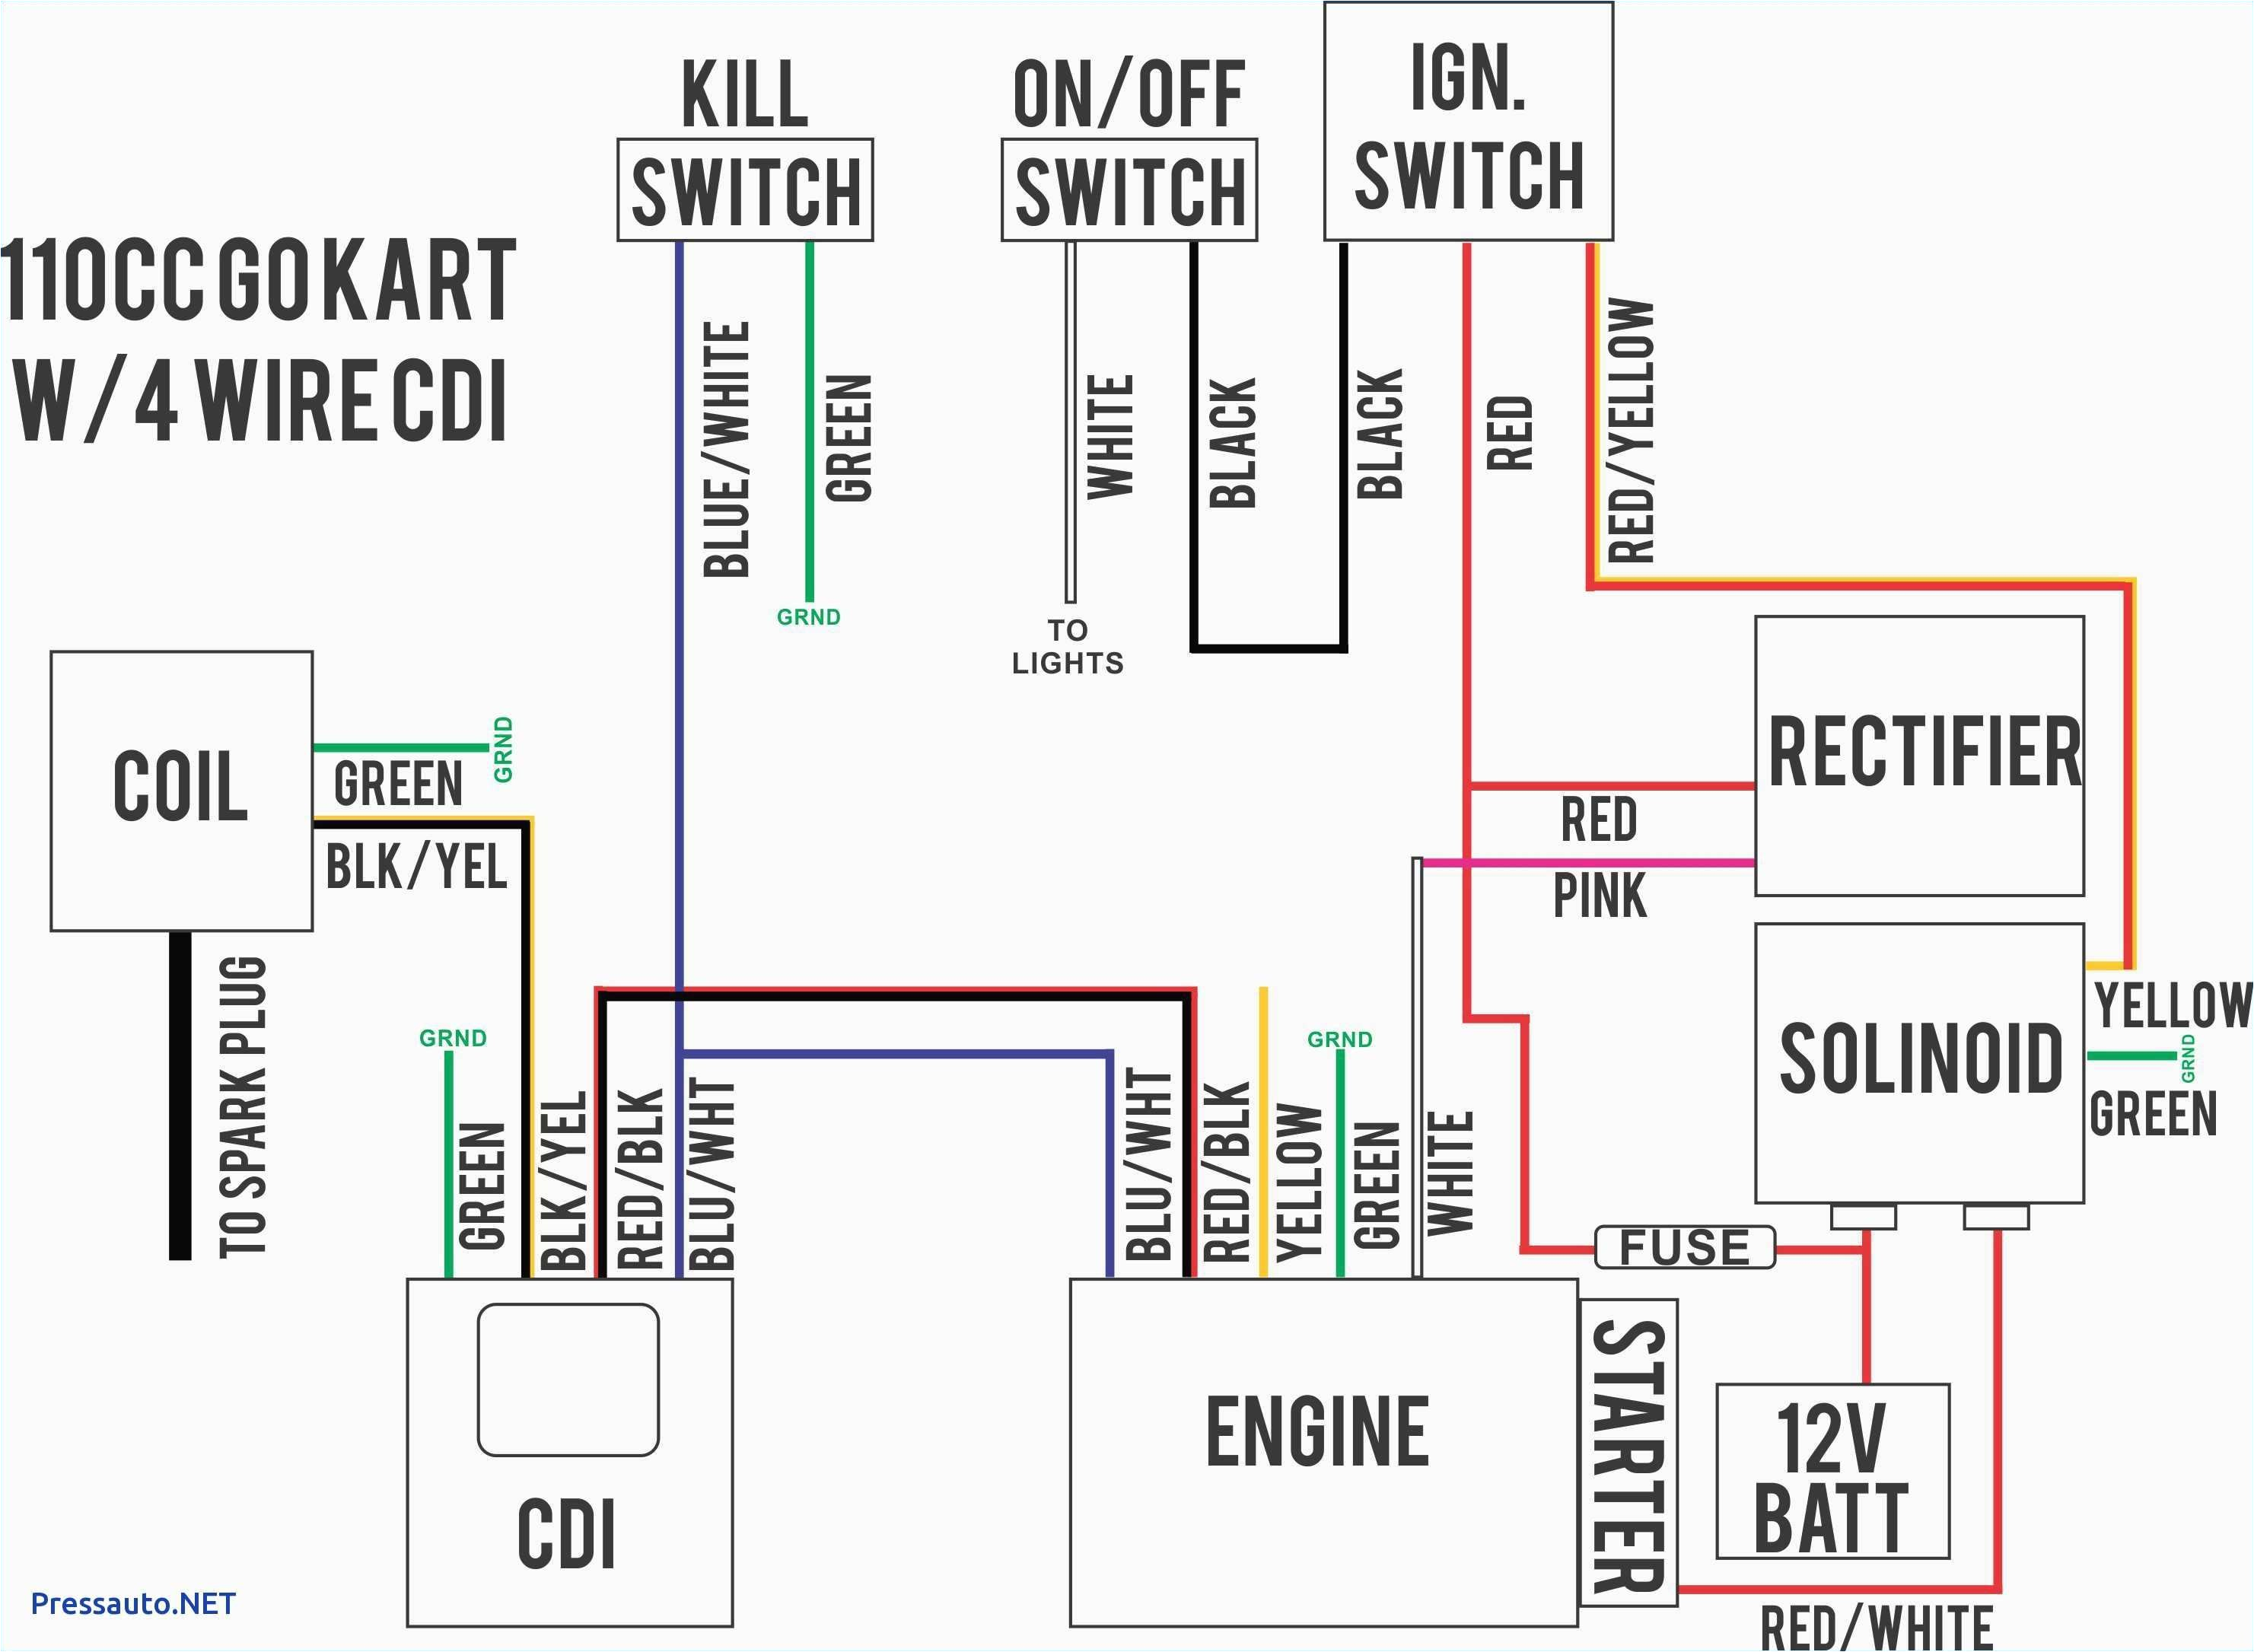 wiring diagram honda wave 125 wiring diagram mega honda wave 125 wiring diagram pdf wiring diagram honda wave 125